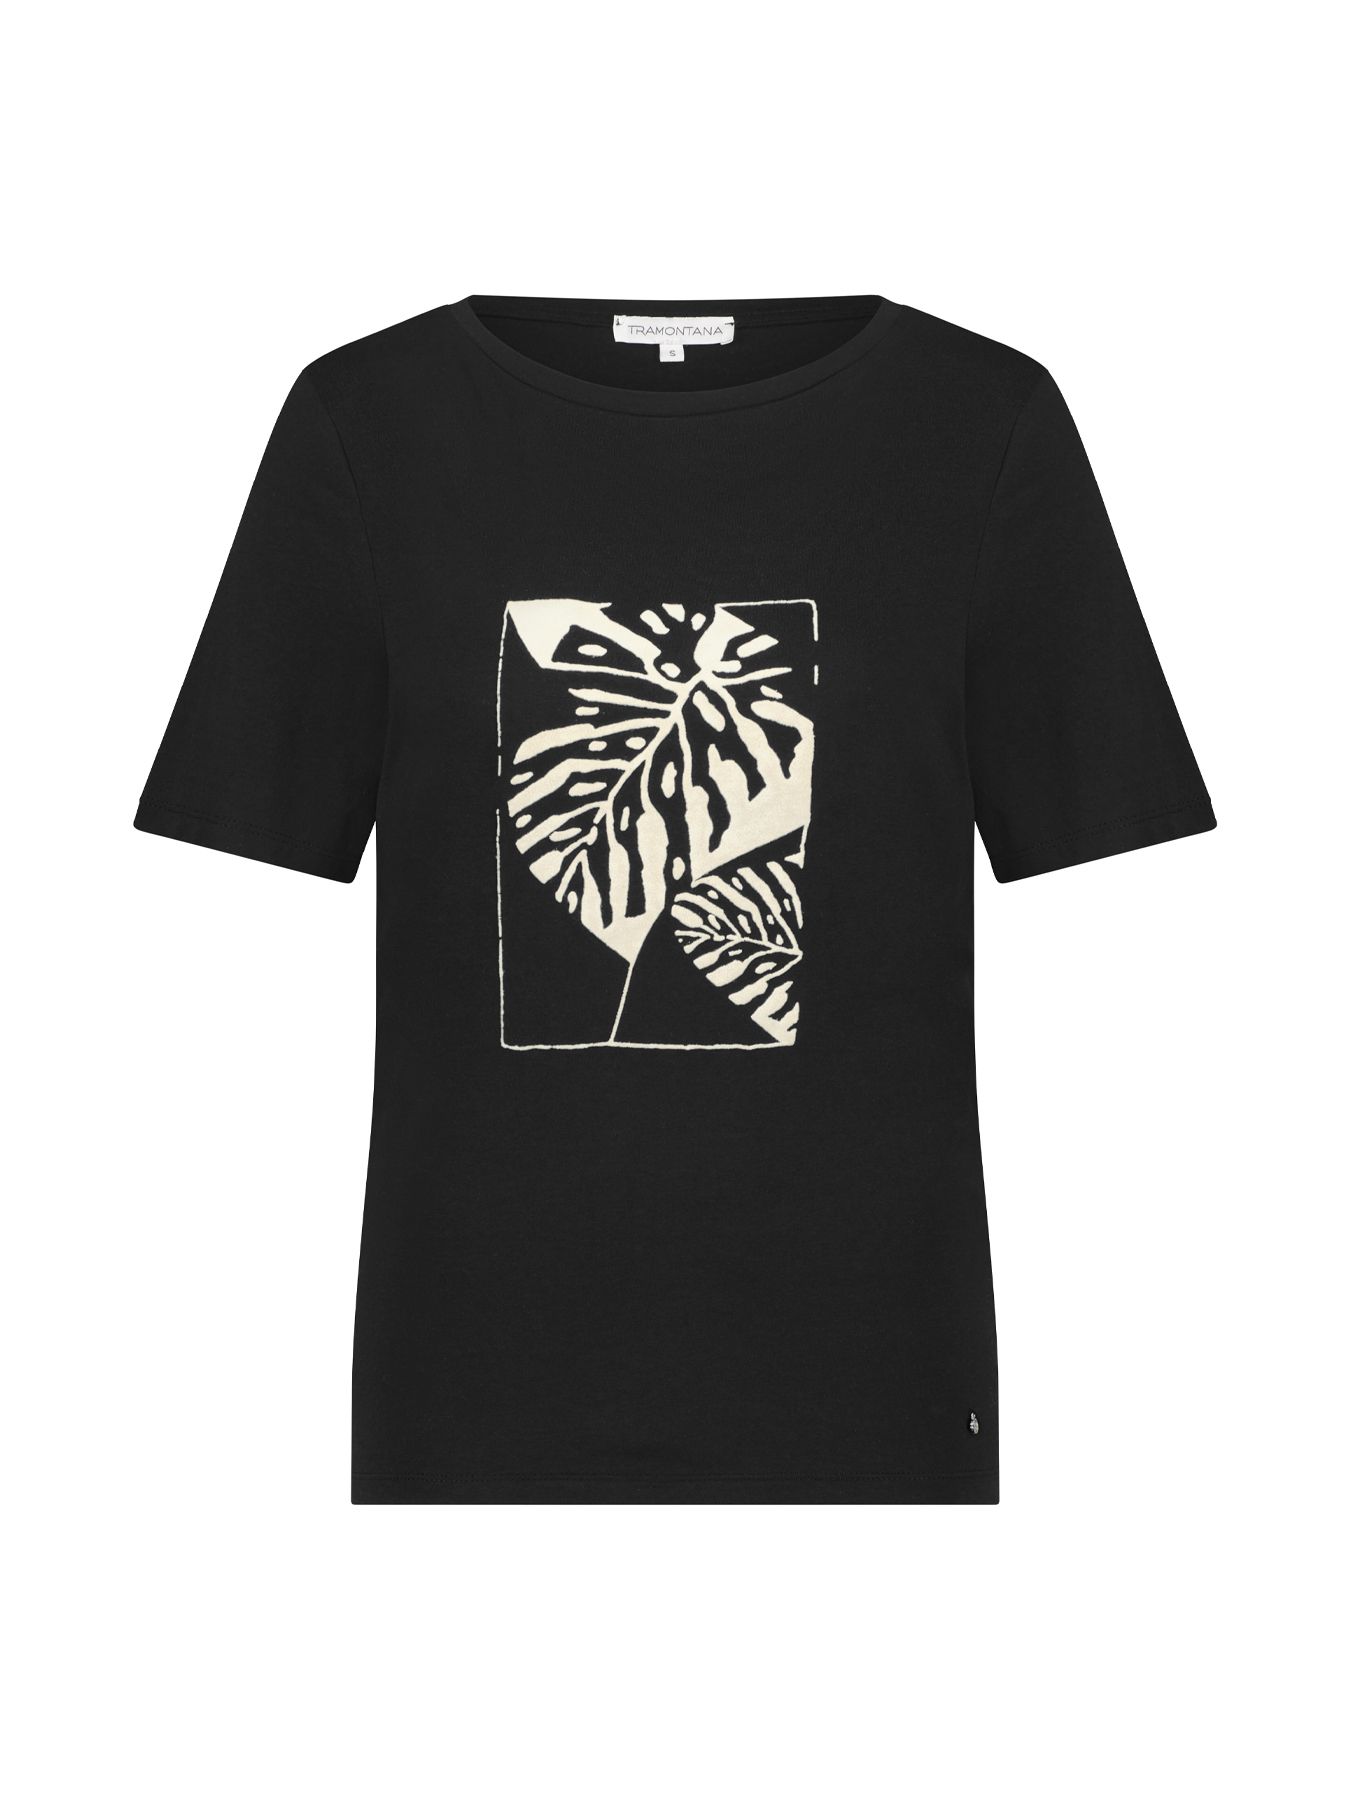 Tramontana T-Shirt Leaf Black 009000 2900139869043